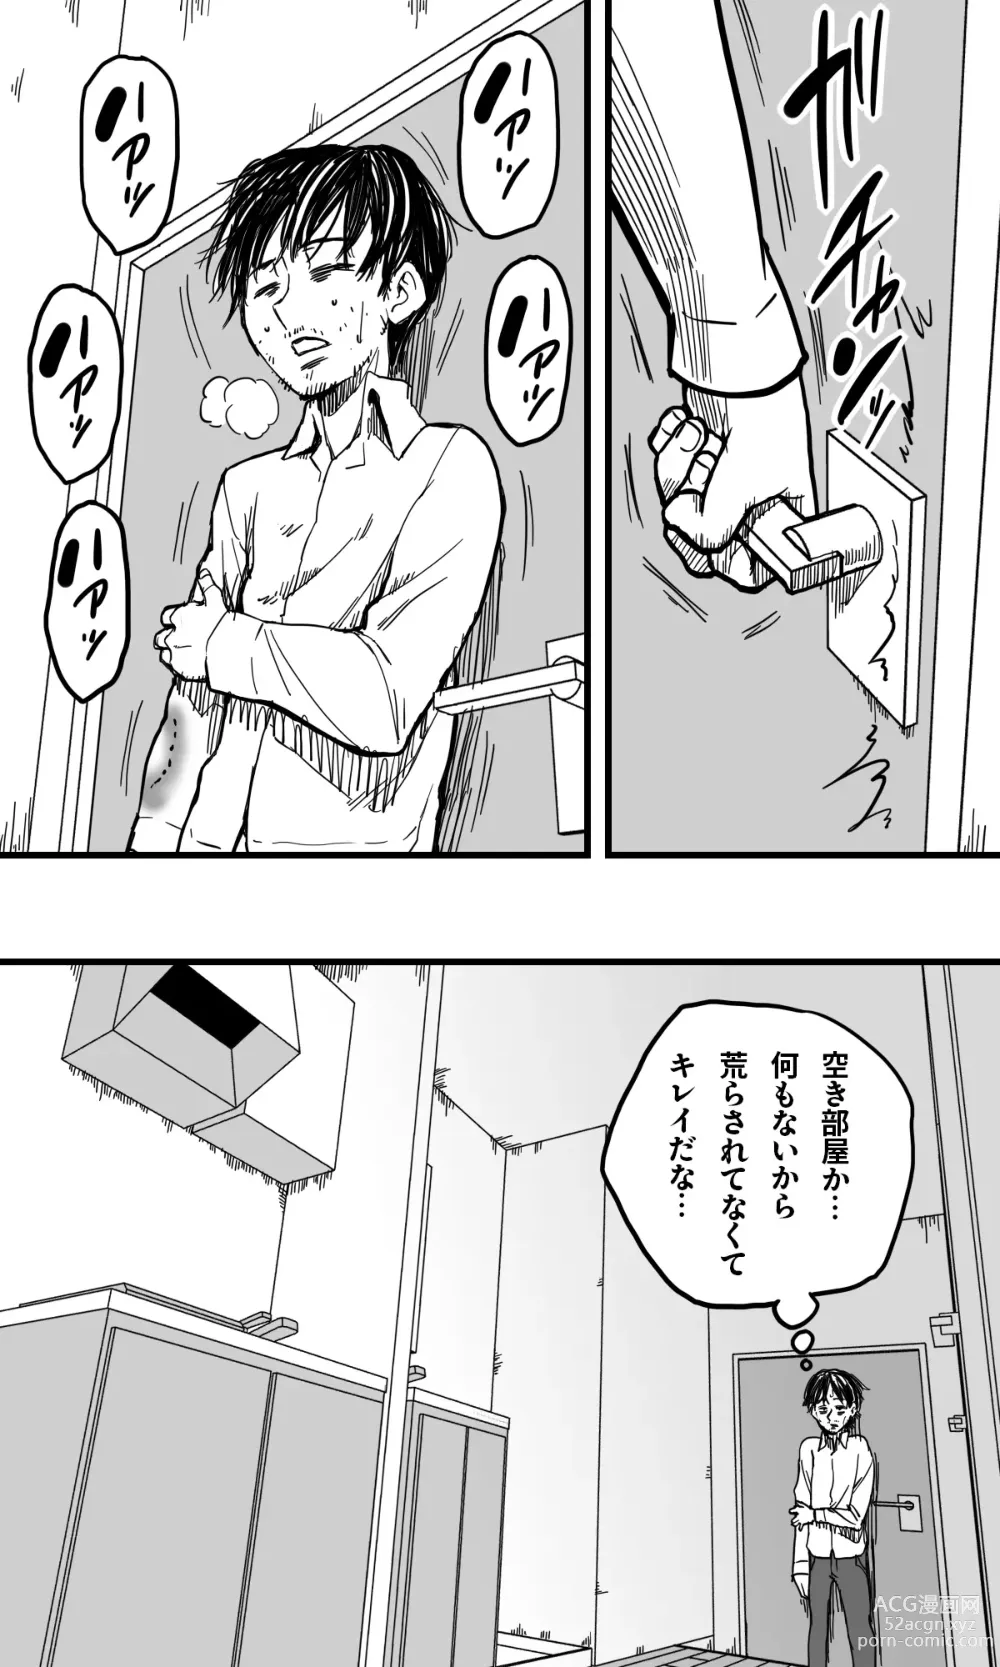 Page 3 of doujinshi POLMANGA_10